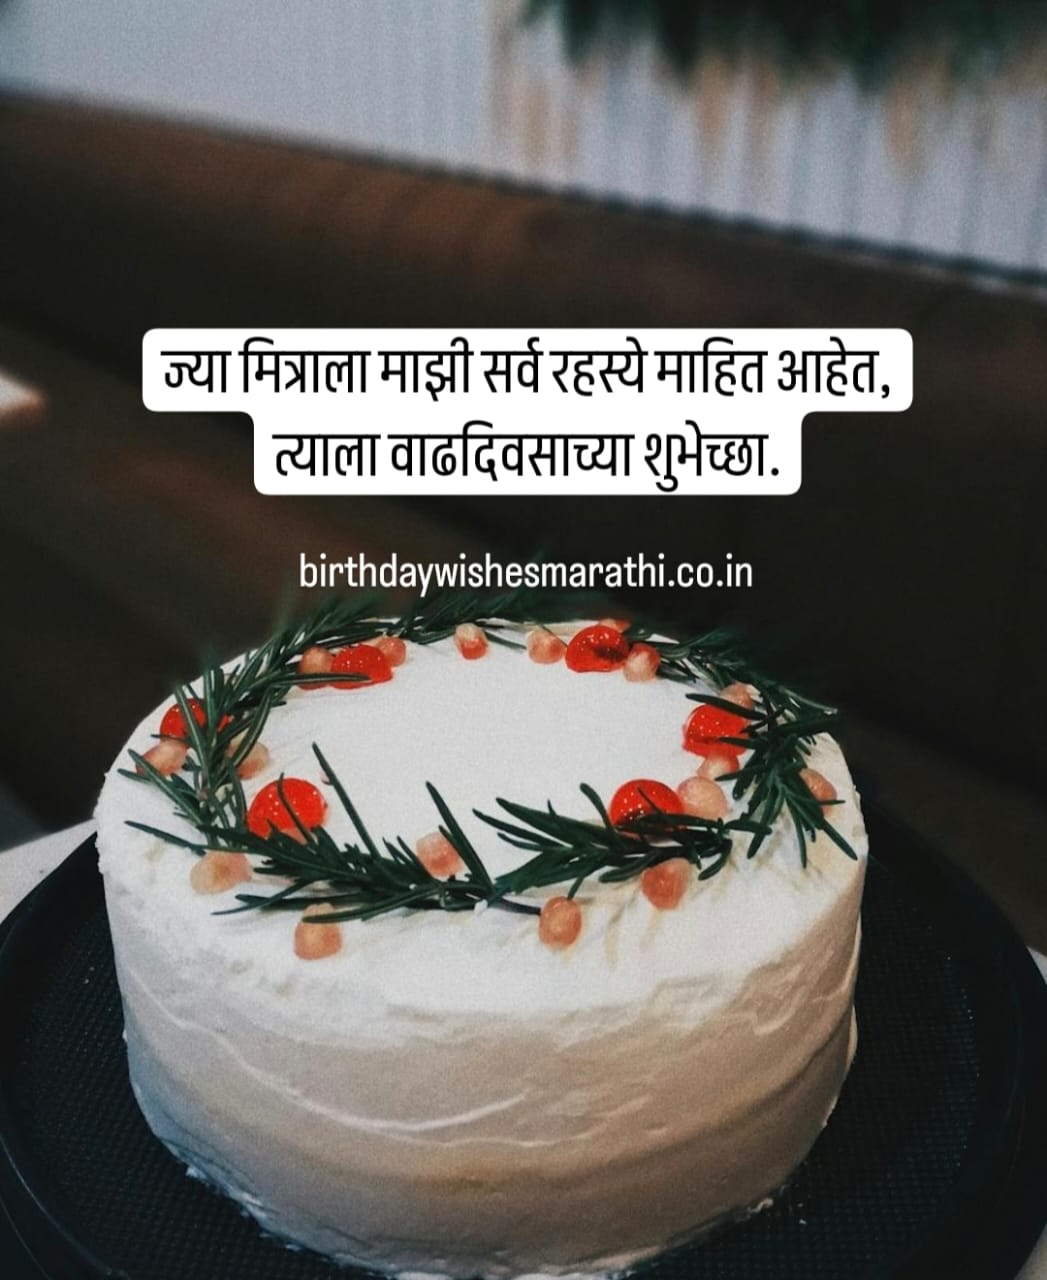 Birthday Wishes for Friend Marathi